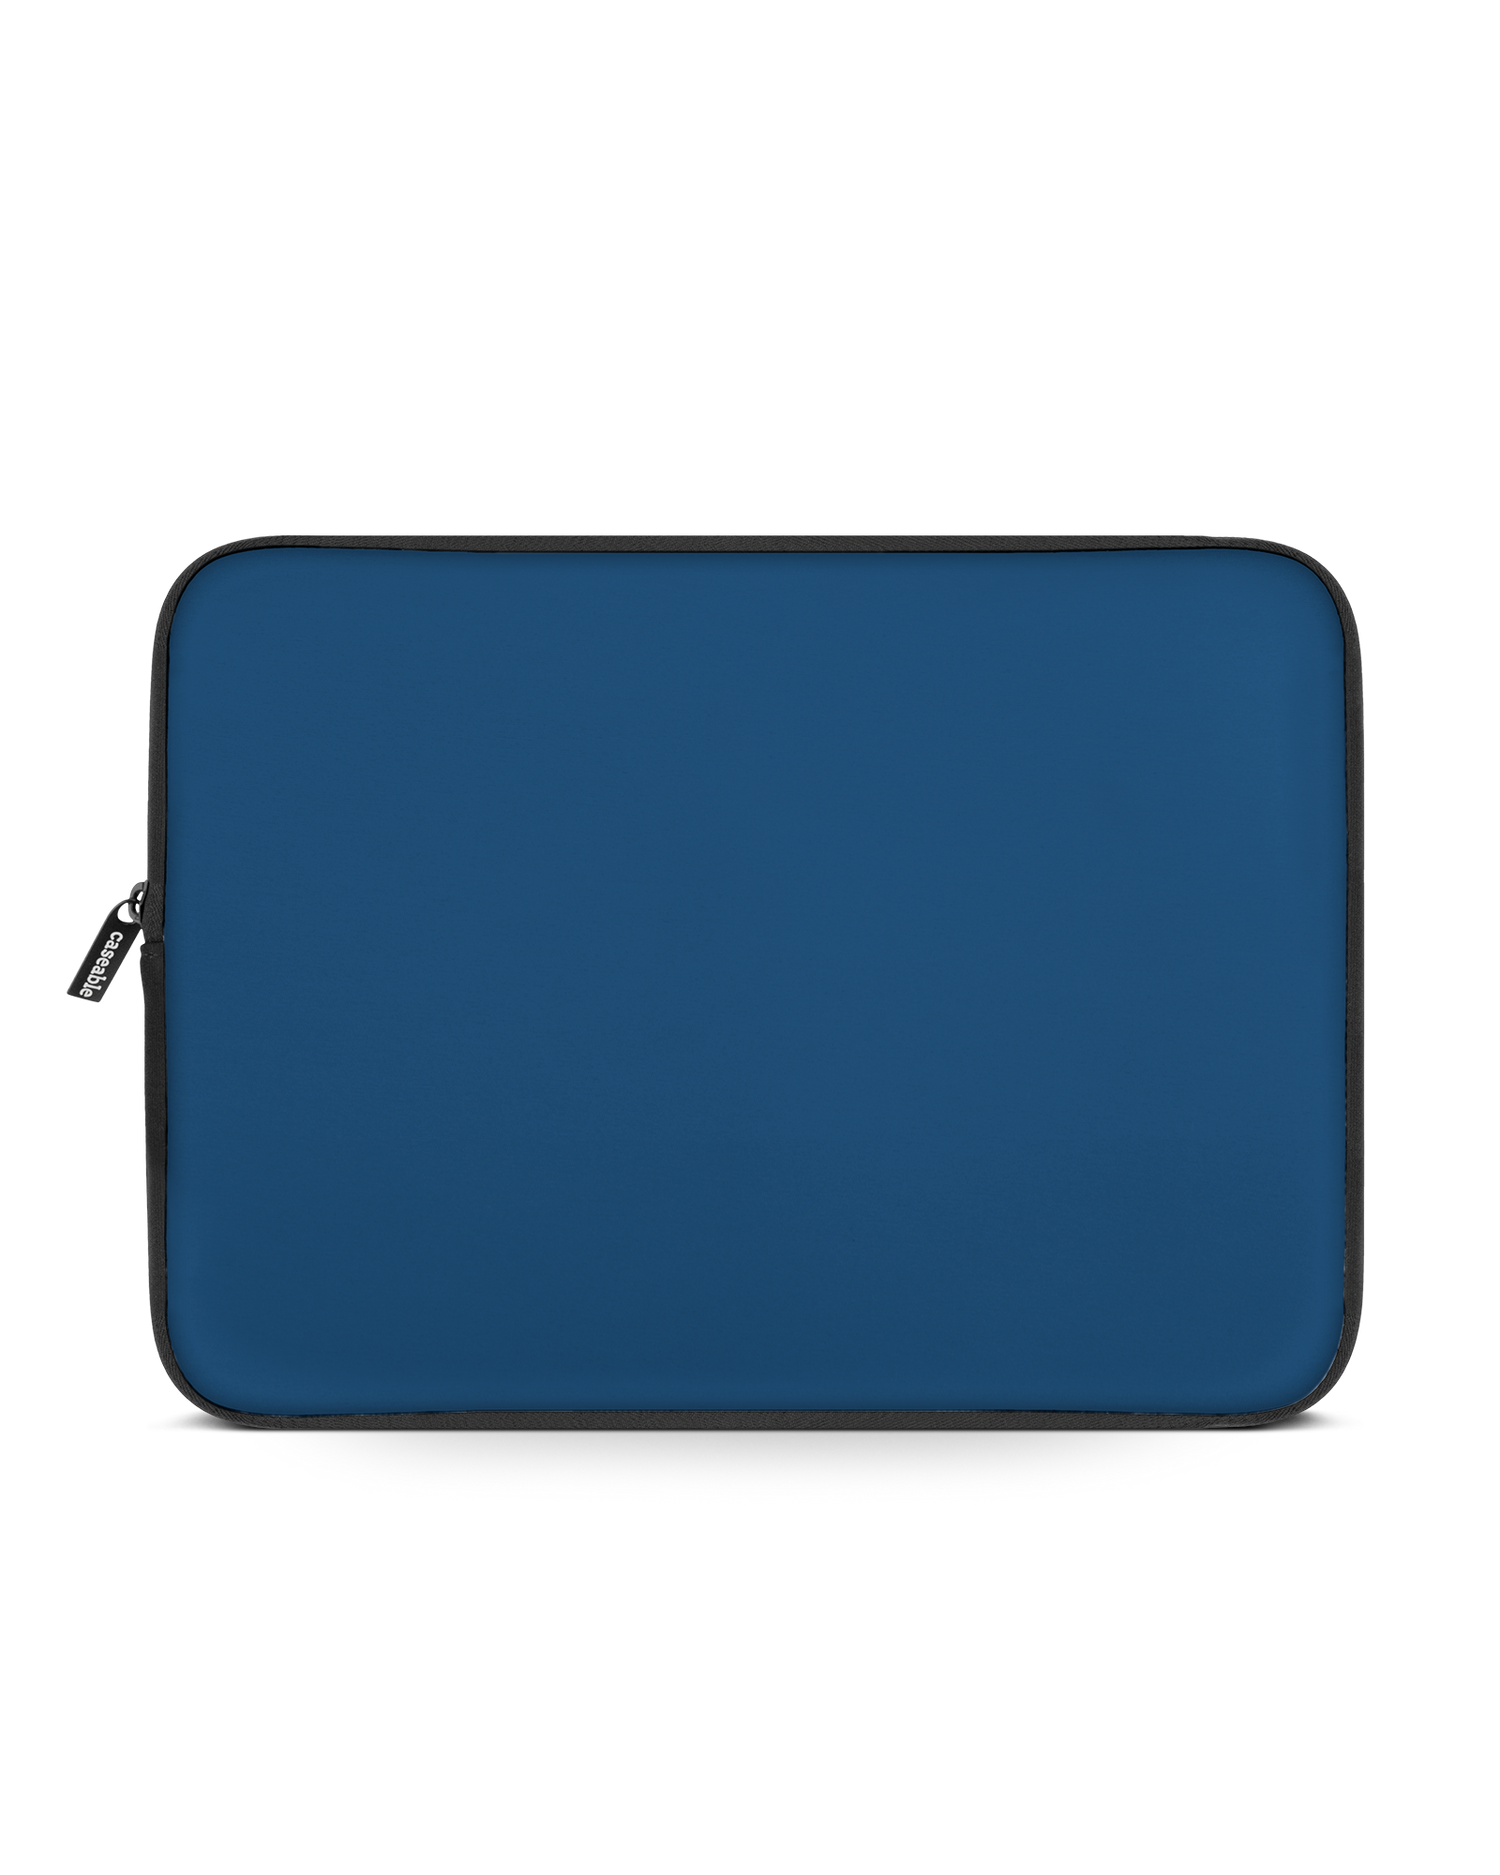 CLASSIC BLUE Laptophülle 15 Zoll: Vorderansicht